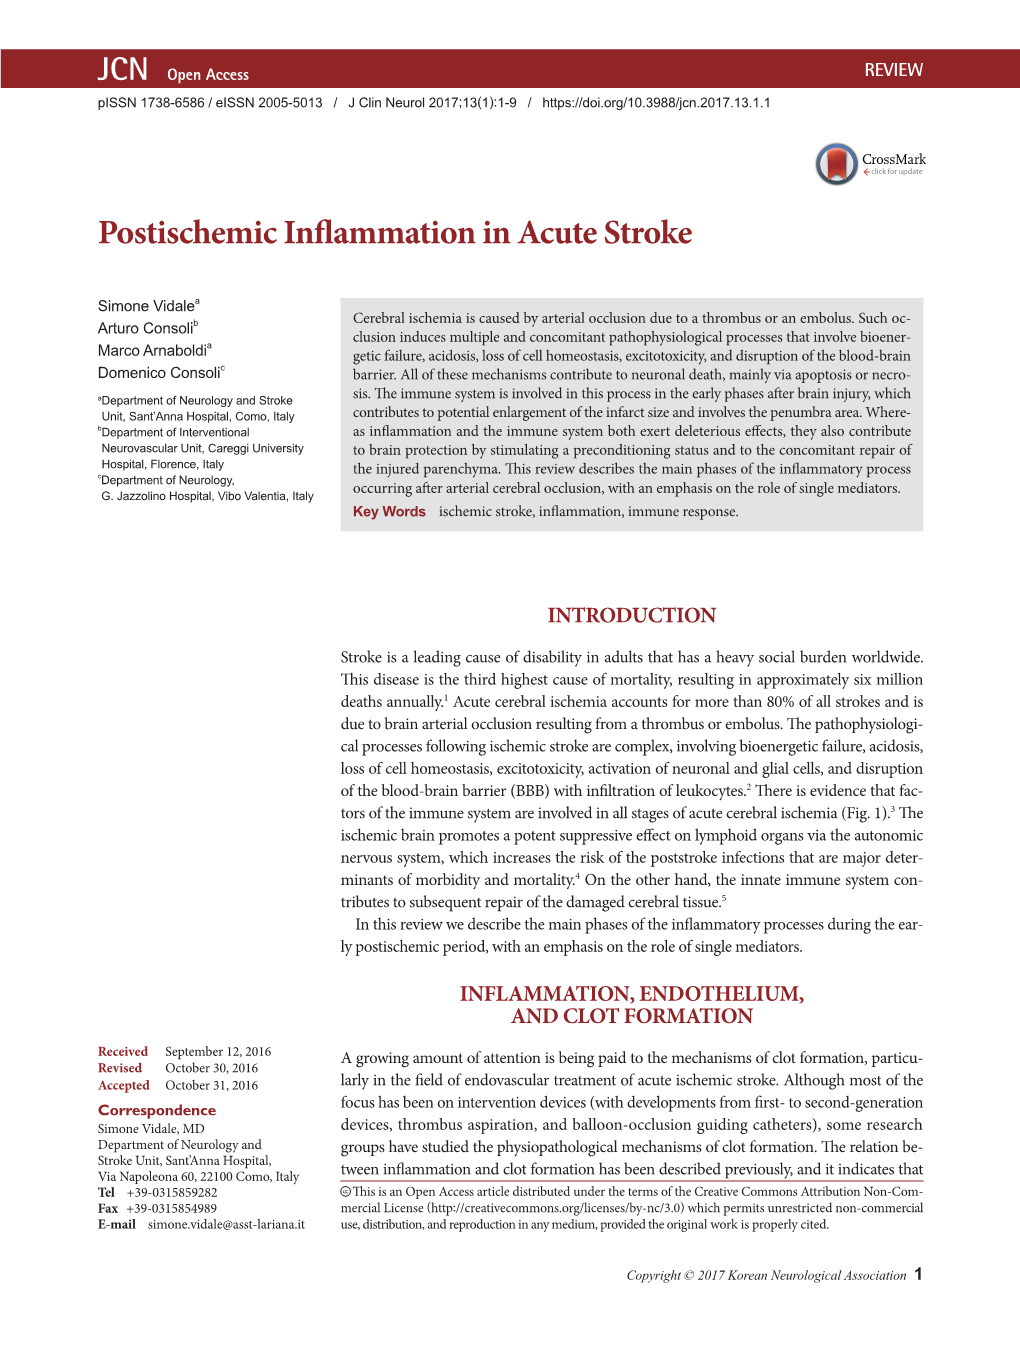 Postischemic Inflammation in Acute Stroke